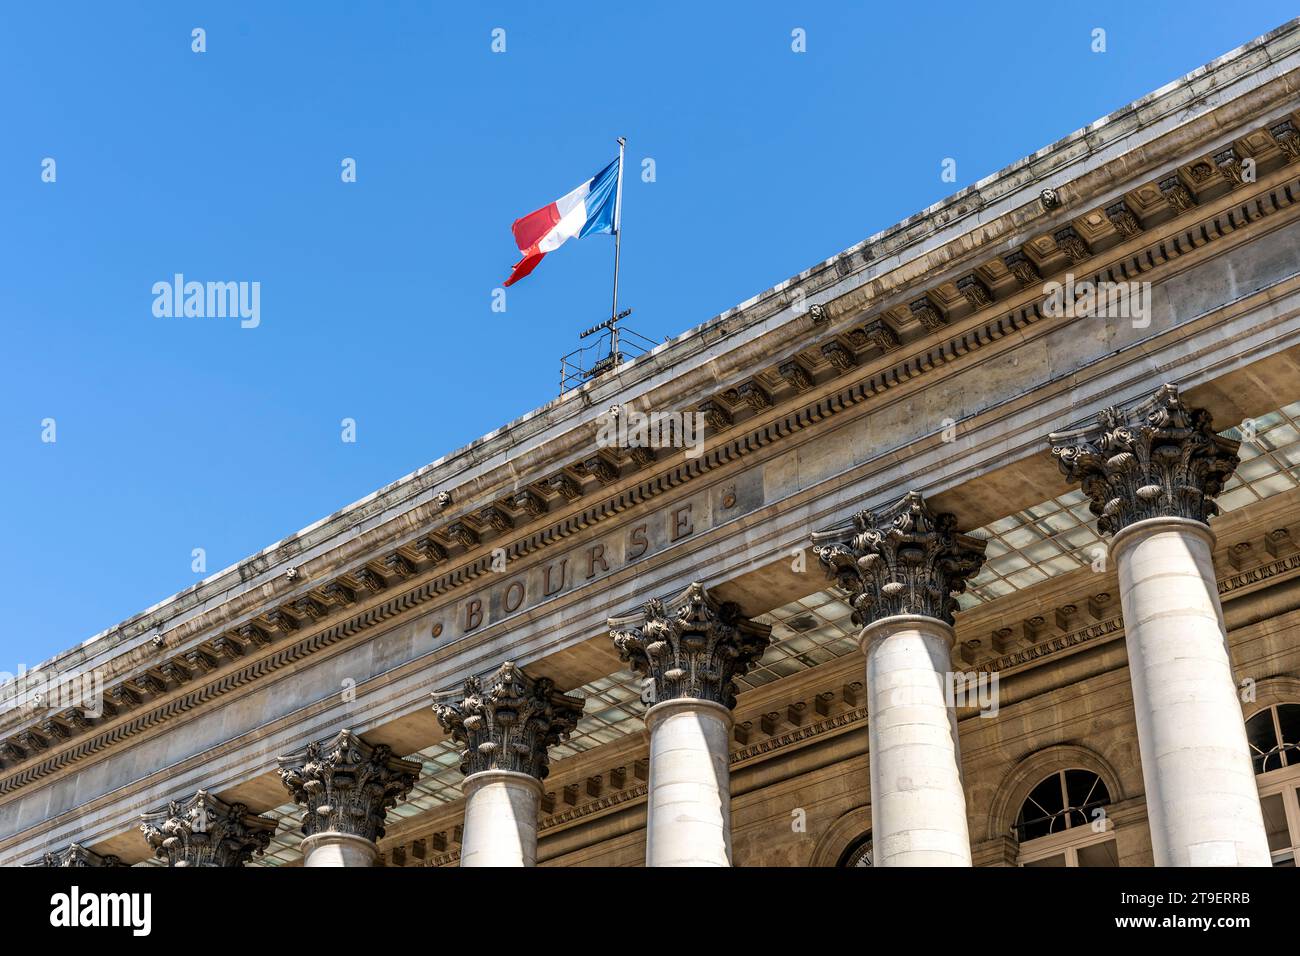 Detail des Palais Brongniart, ehemaliger Börse, im neoklassizistischen Stil des 19. Jahrhunderts, am Place de la Bourse, Pariser Stadtzentrum, Frankreich Stockfoto